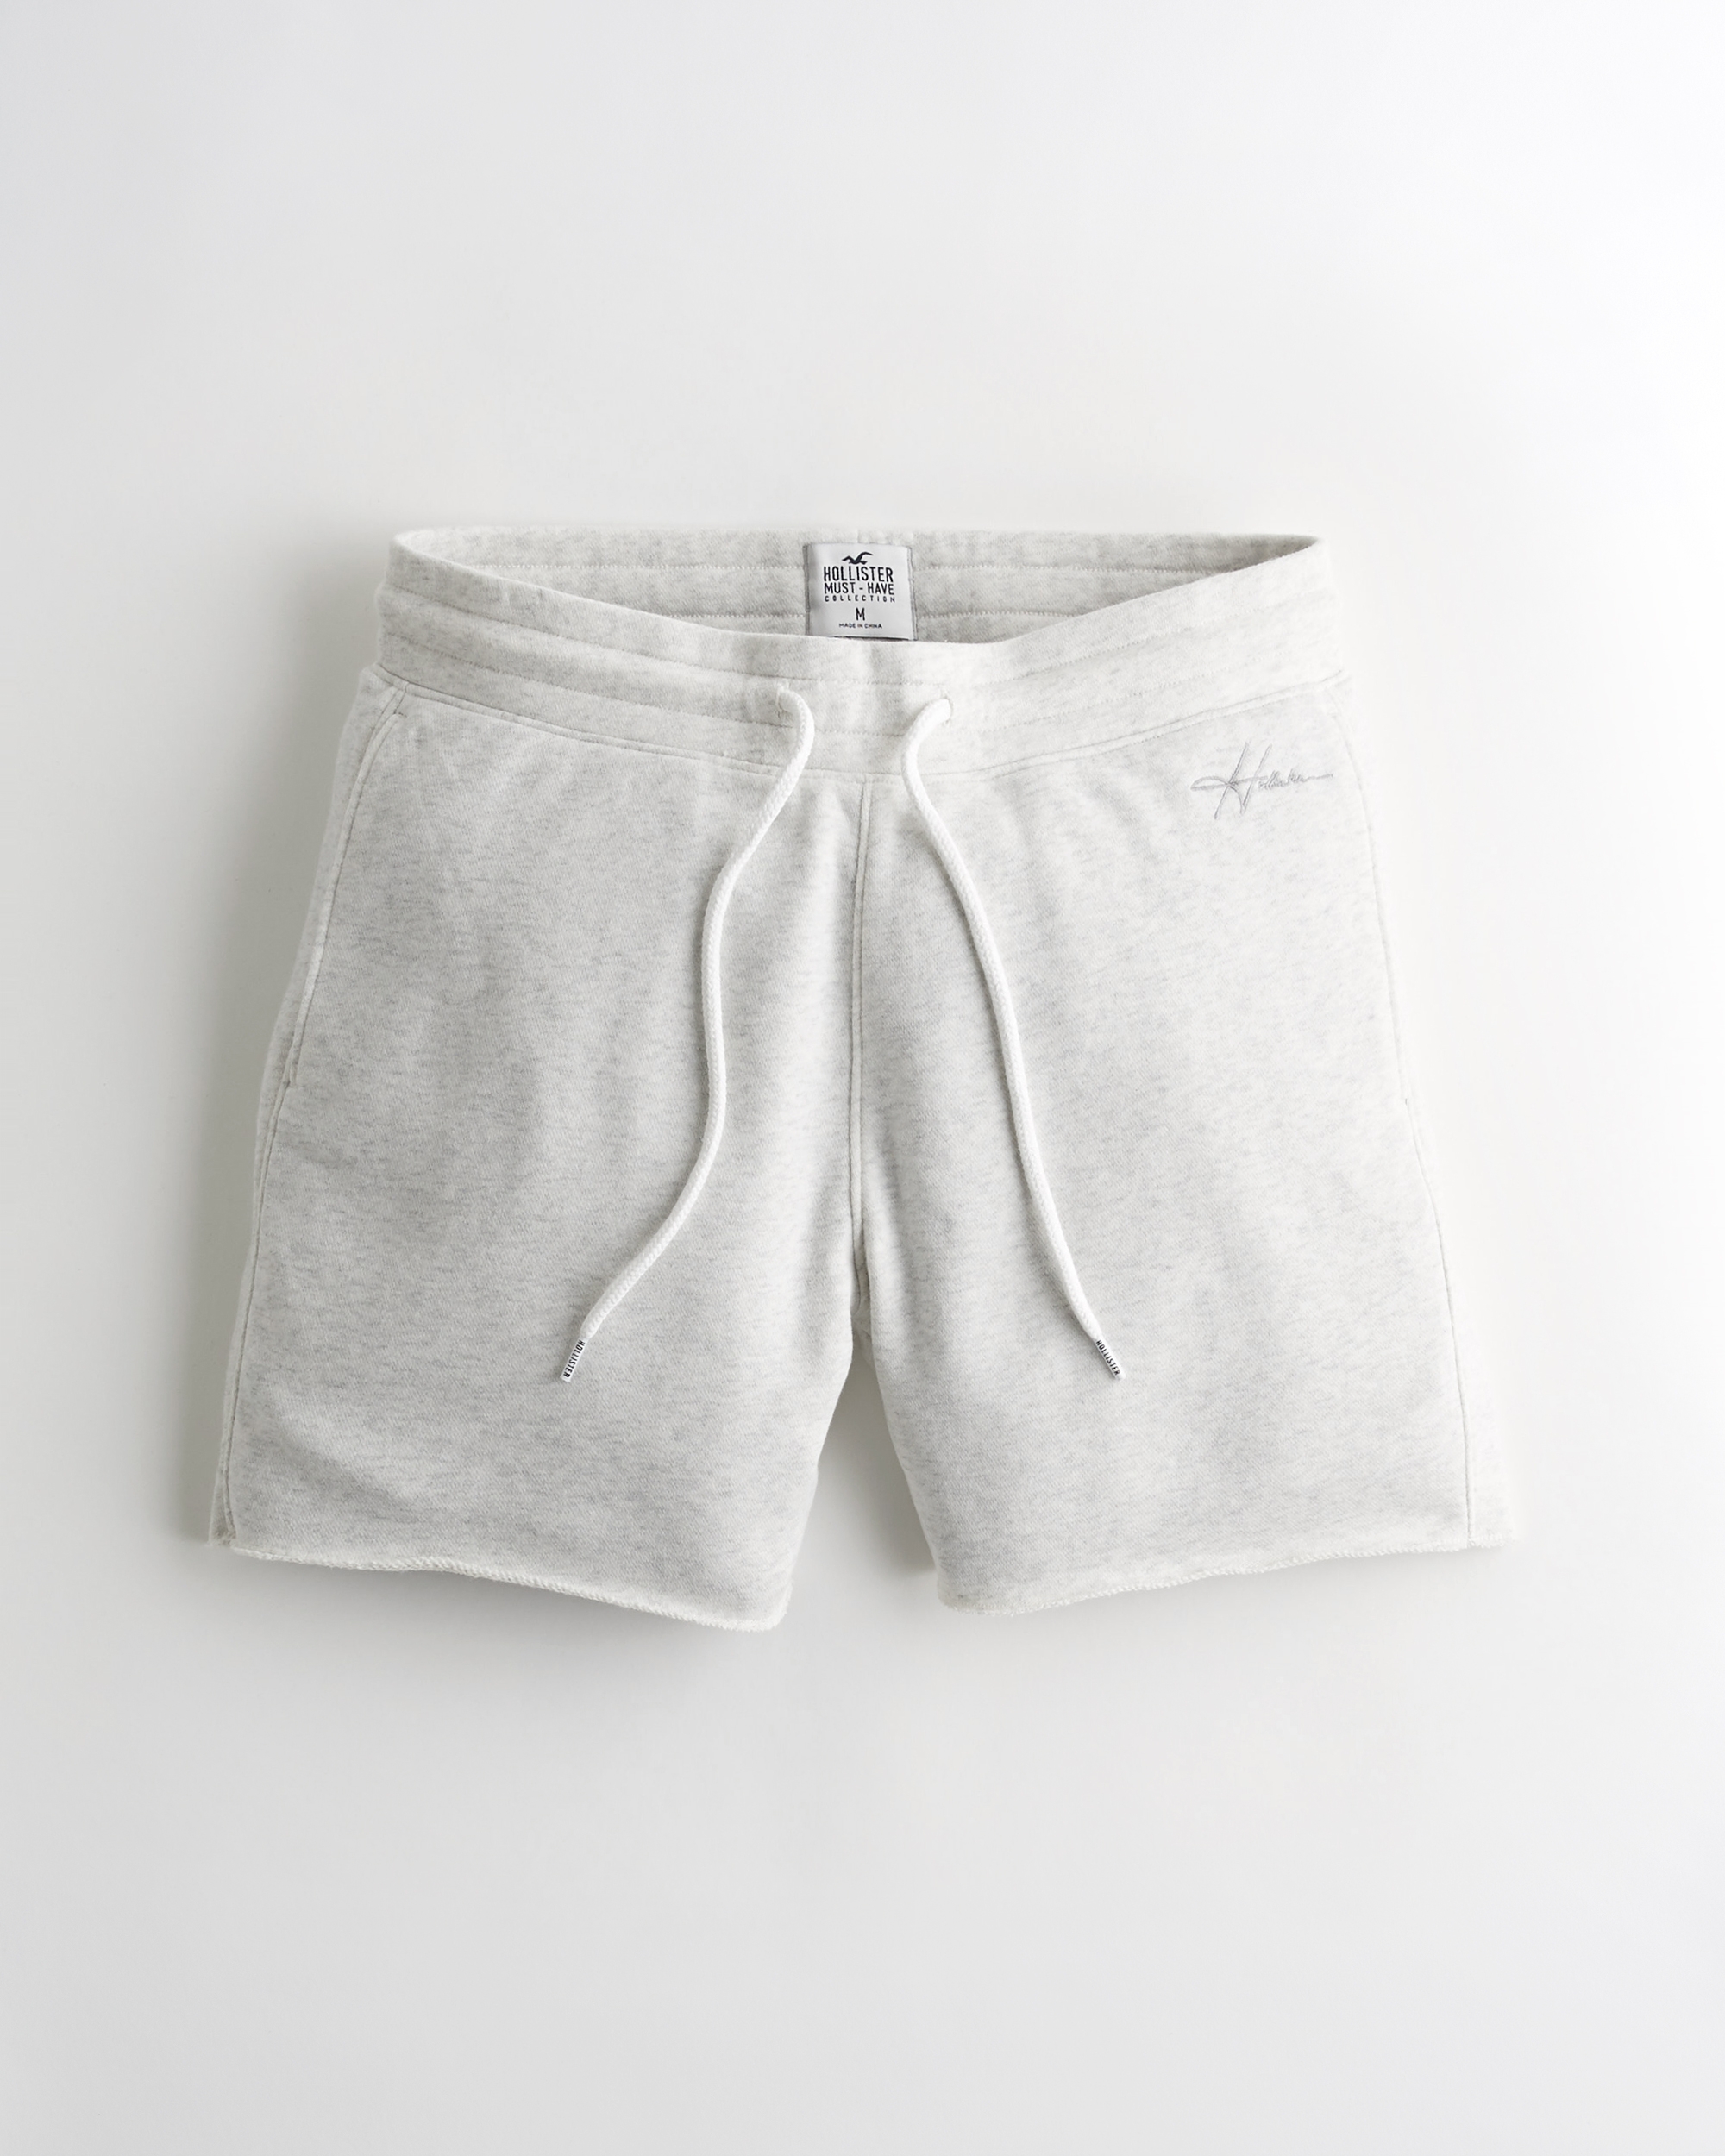 hollister shorts price